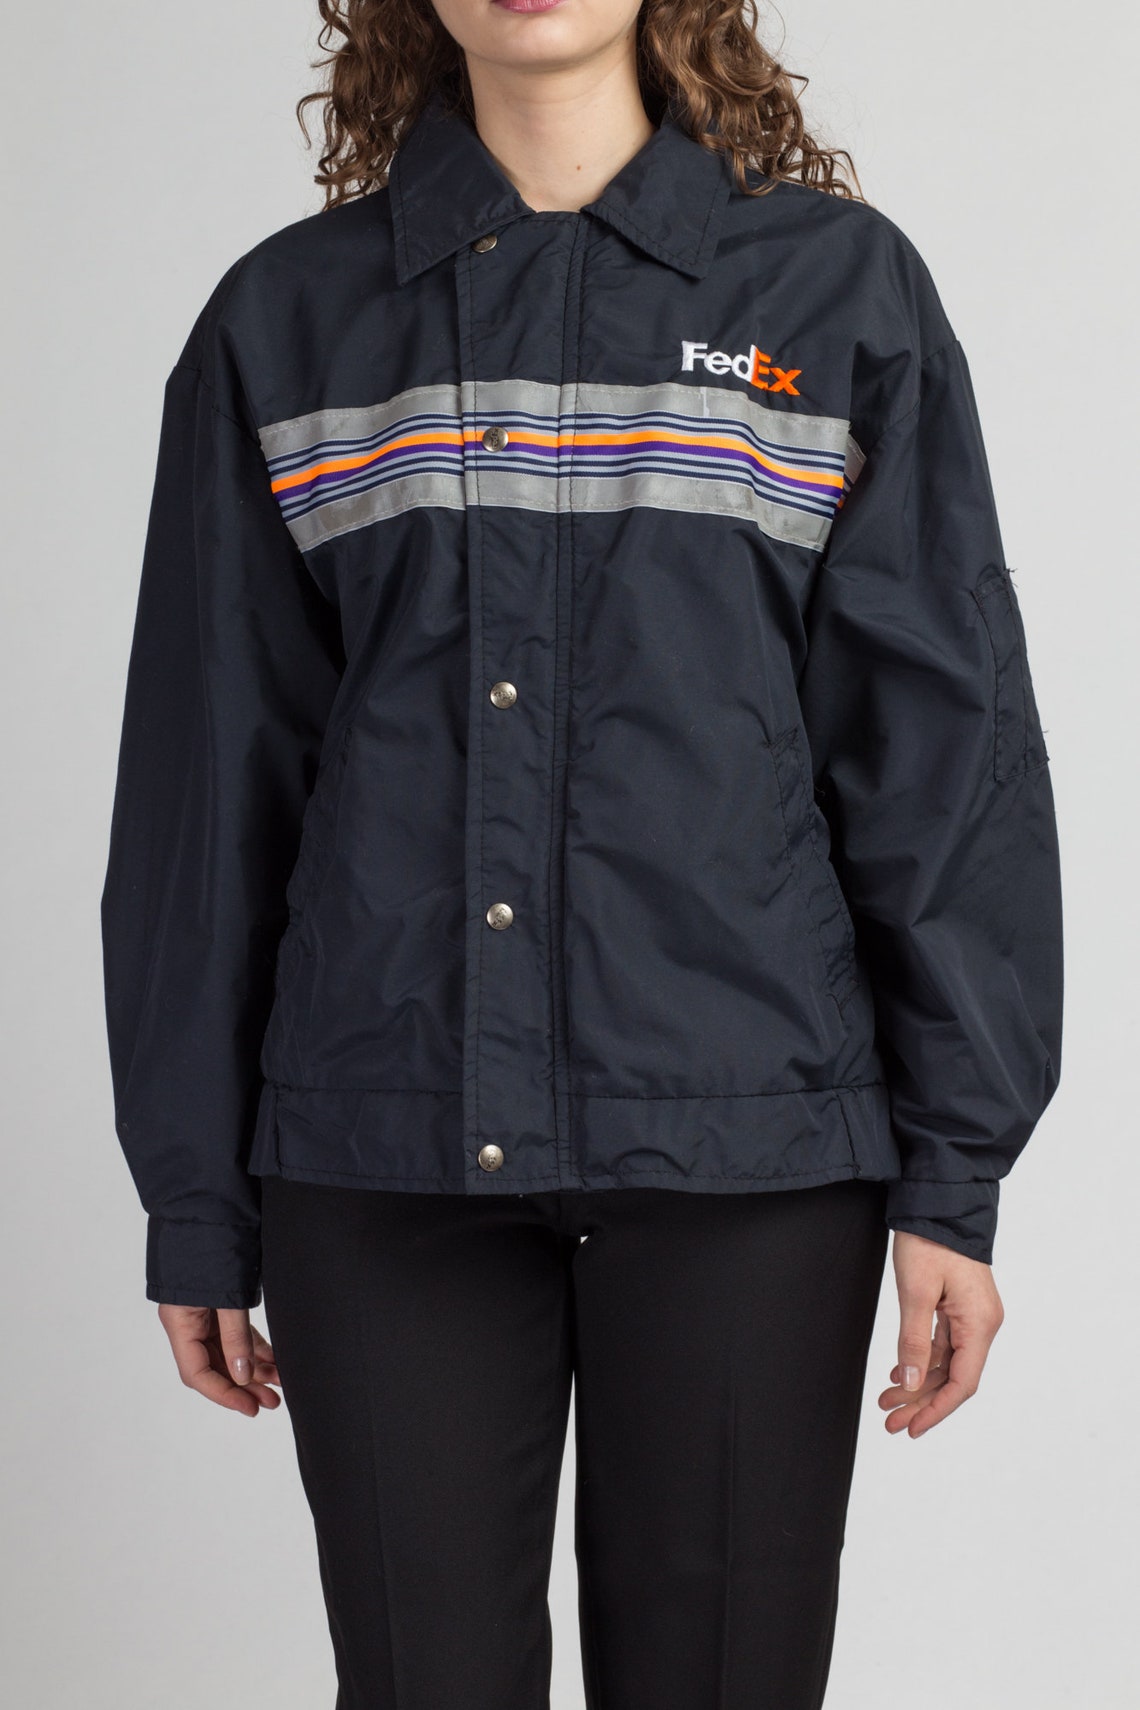 80s FedEx Uniform Jacket Men's Medium Vintage Black | Etsy